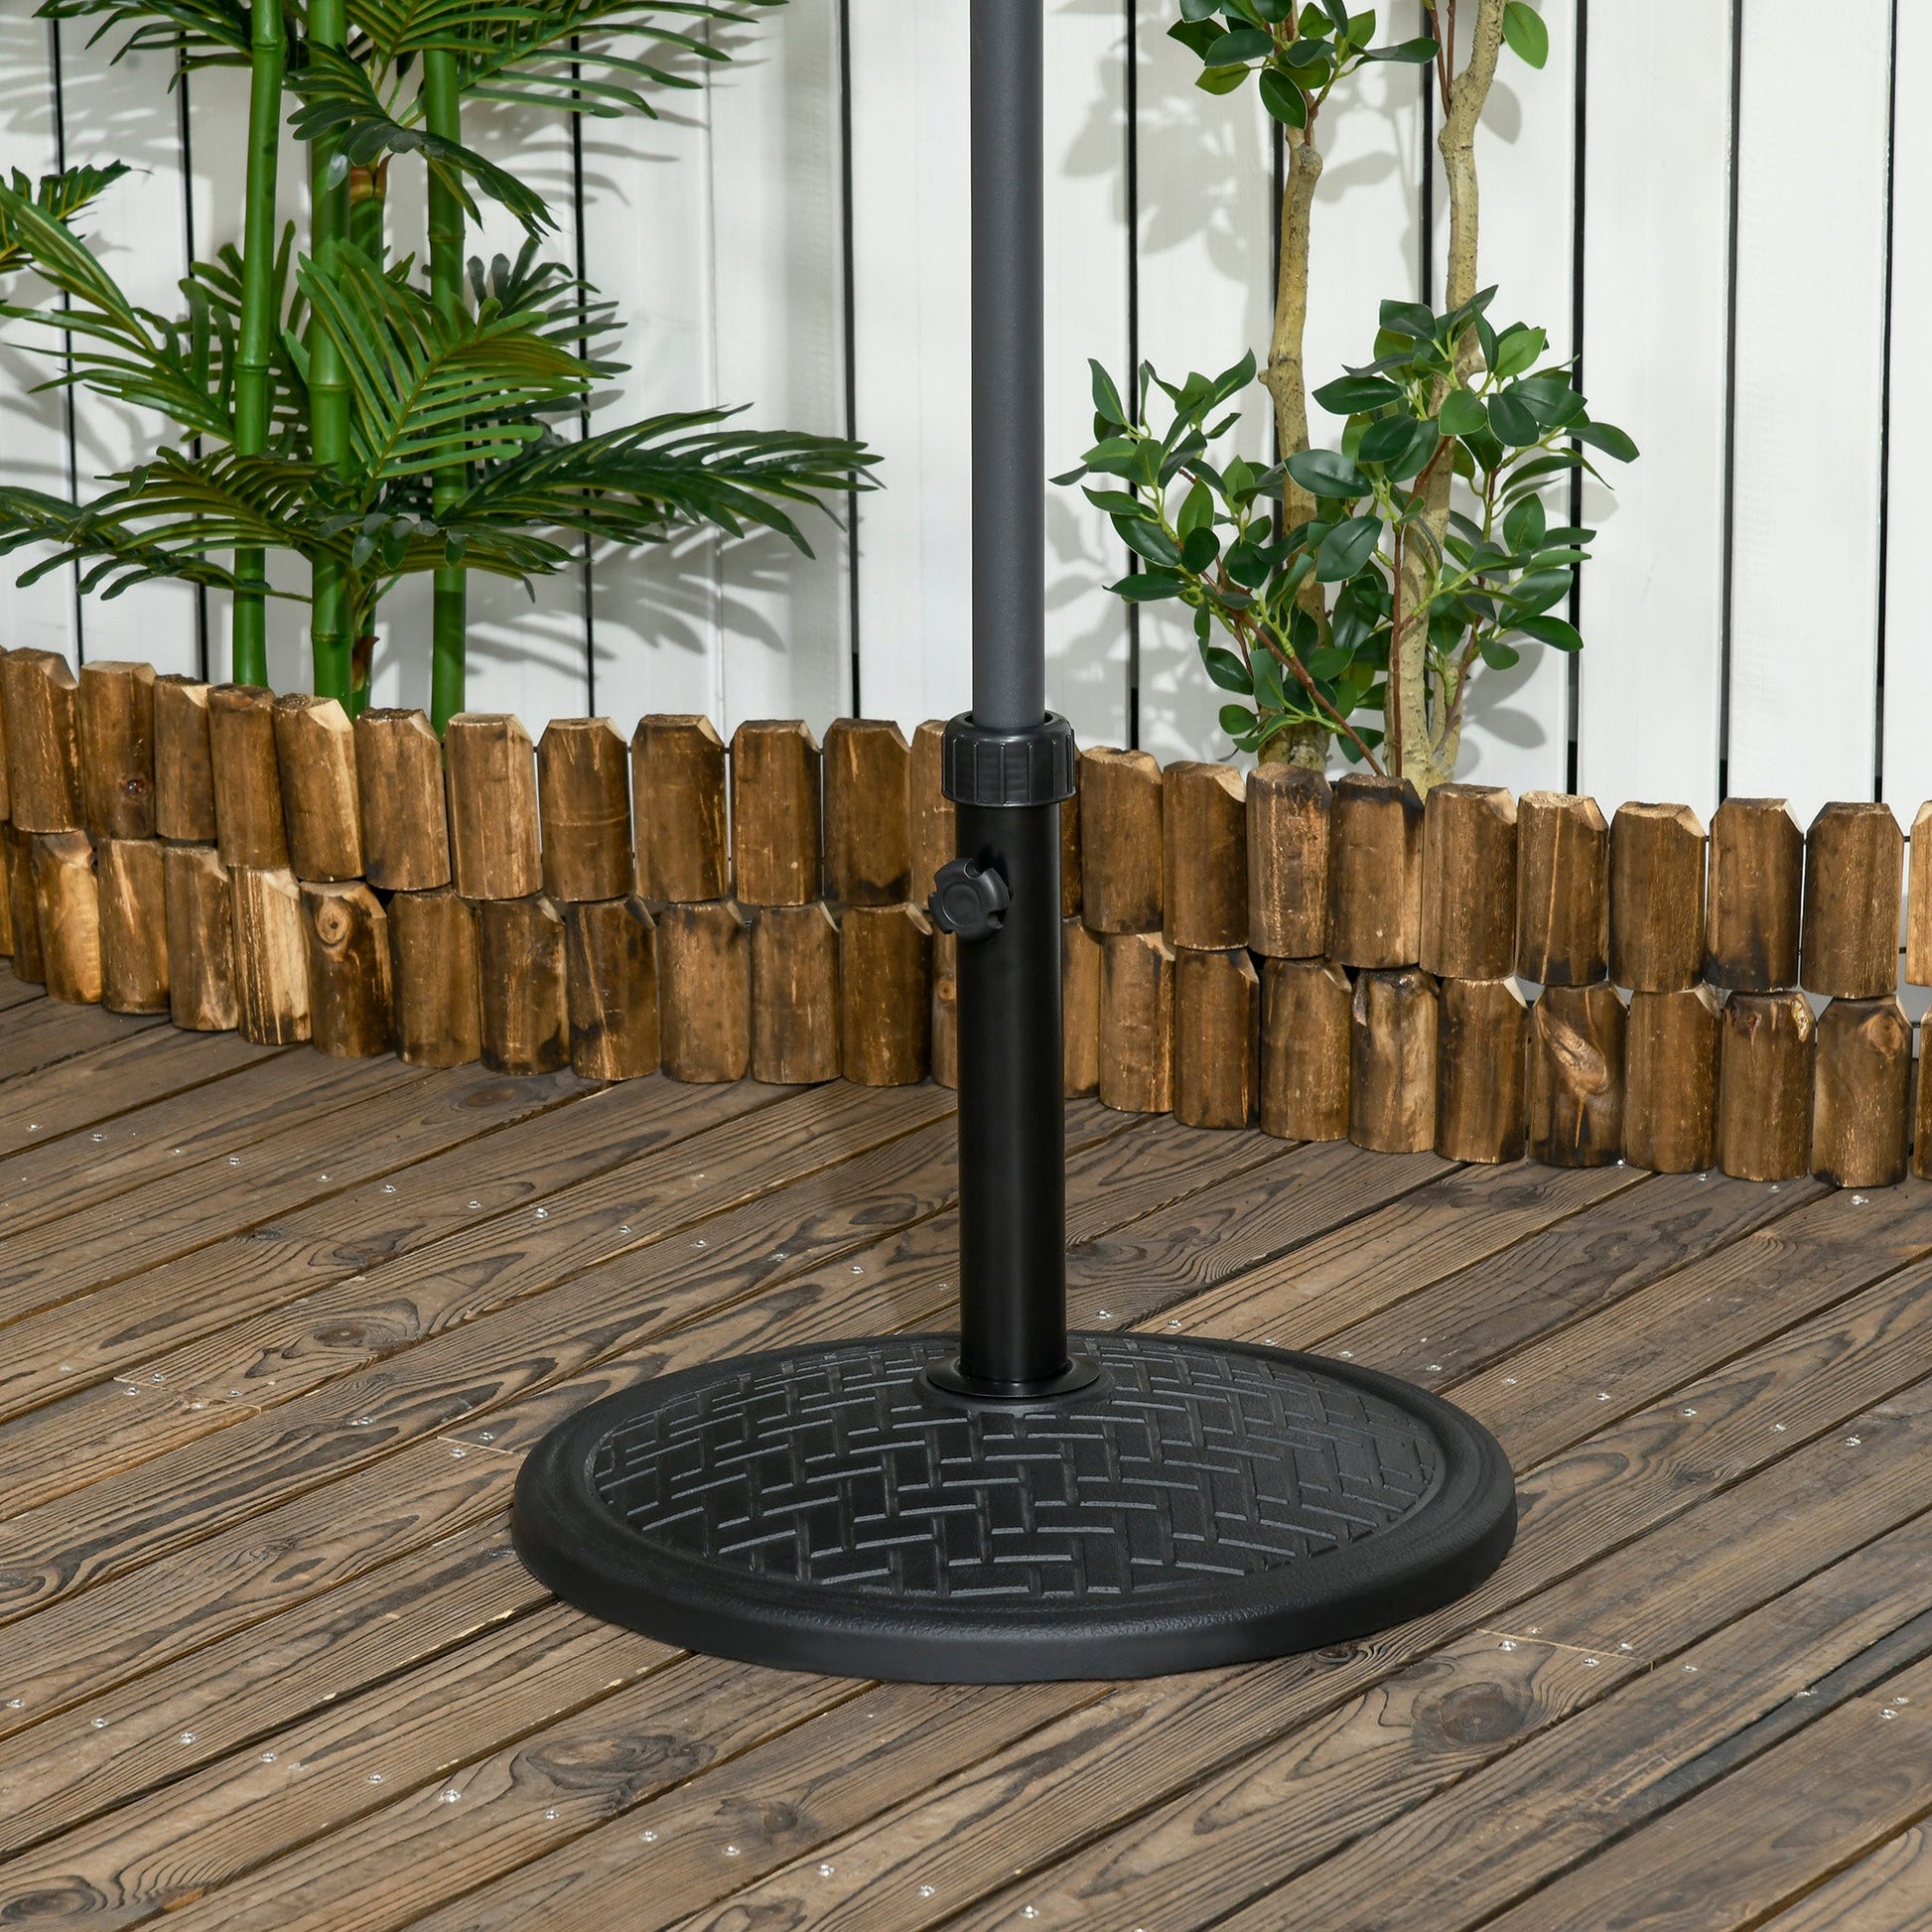 31lbs Patio Umbrella Base Holder, Concrete Round Outdoor Market Umbrella Stand Weight for Lawn, Deck, Backyard, Garden, Black at Gallery Canada